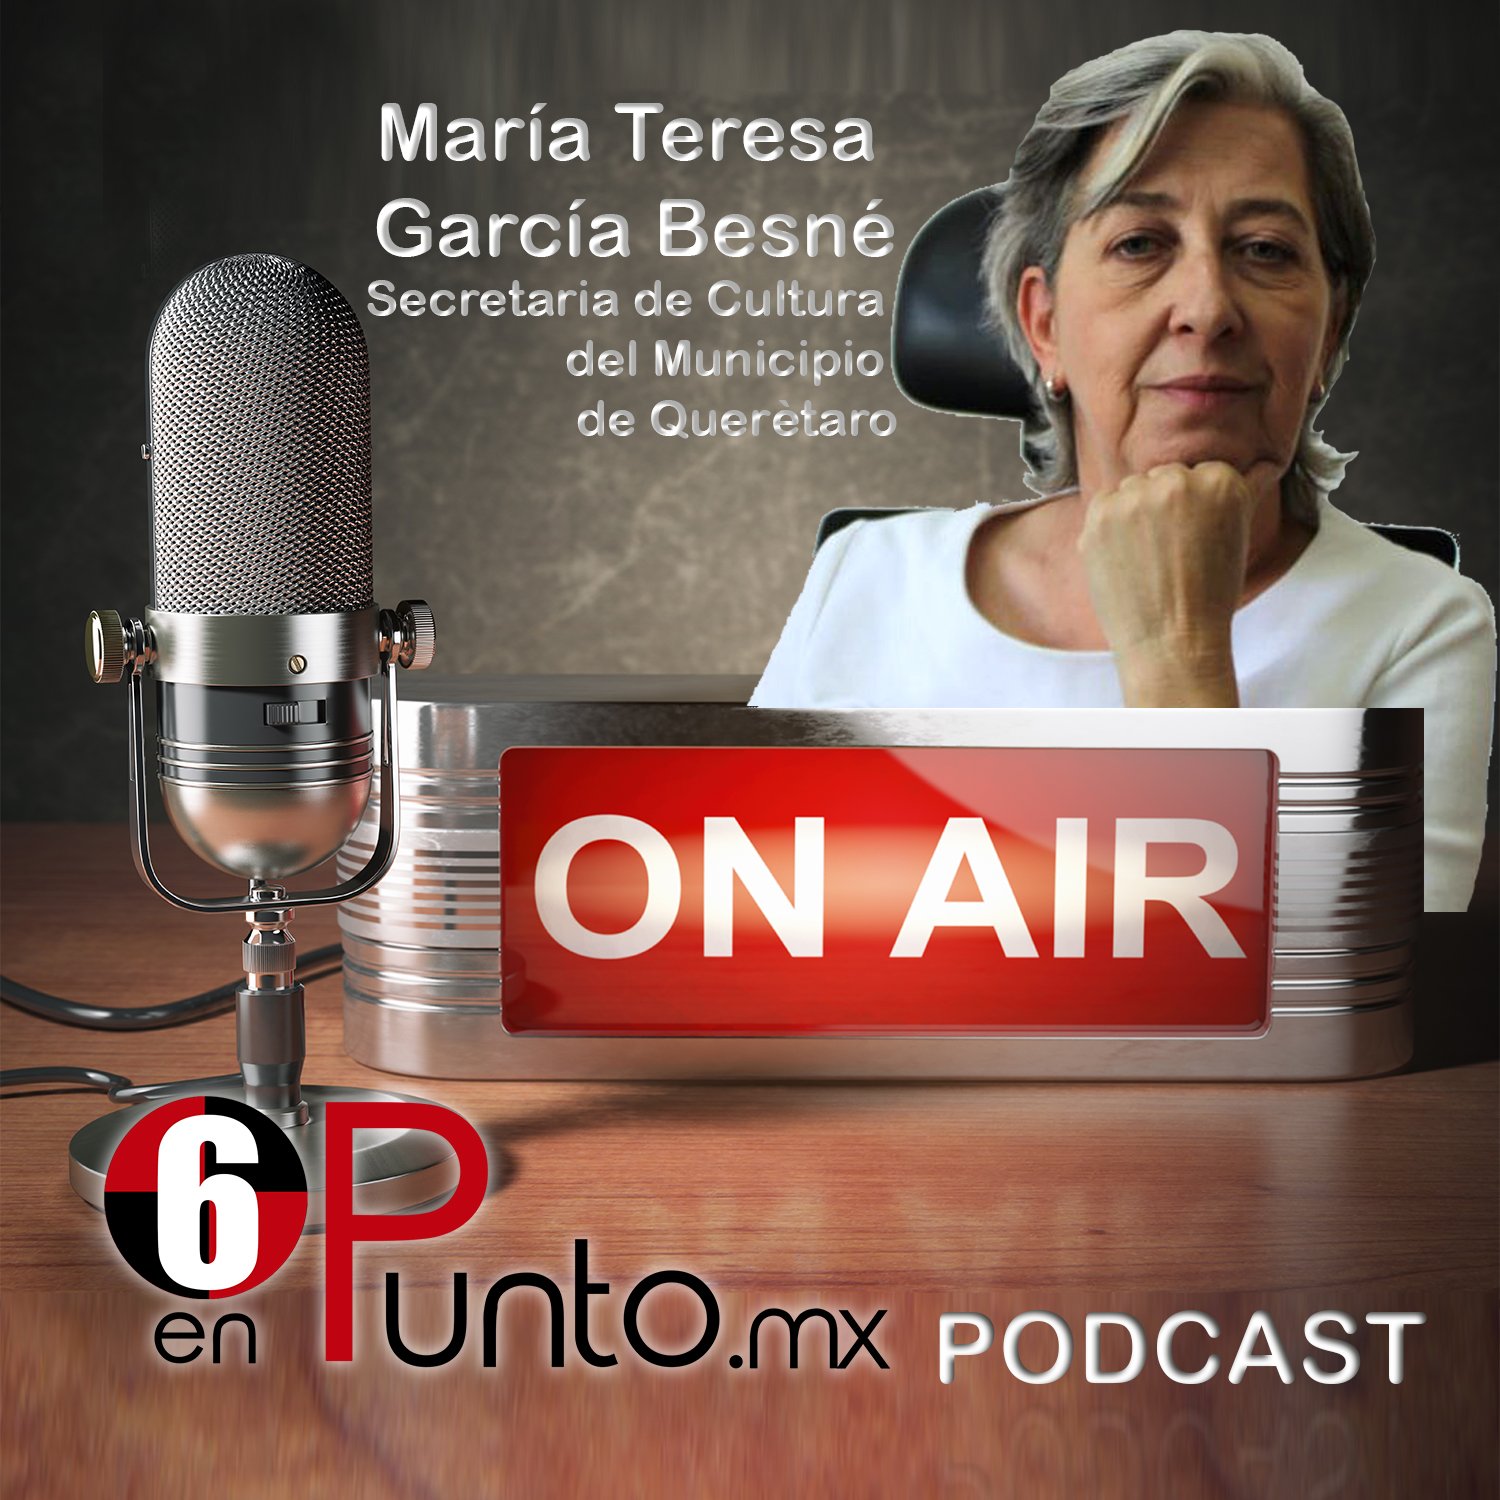 María Teresa García Besné, secretaria de Cultura del Municipio de Querétaro